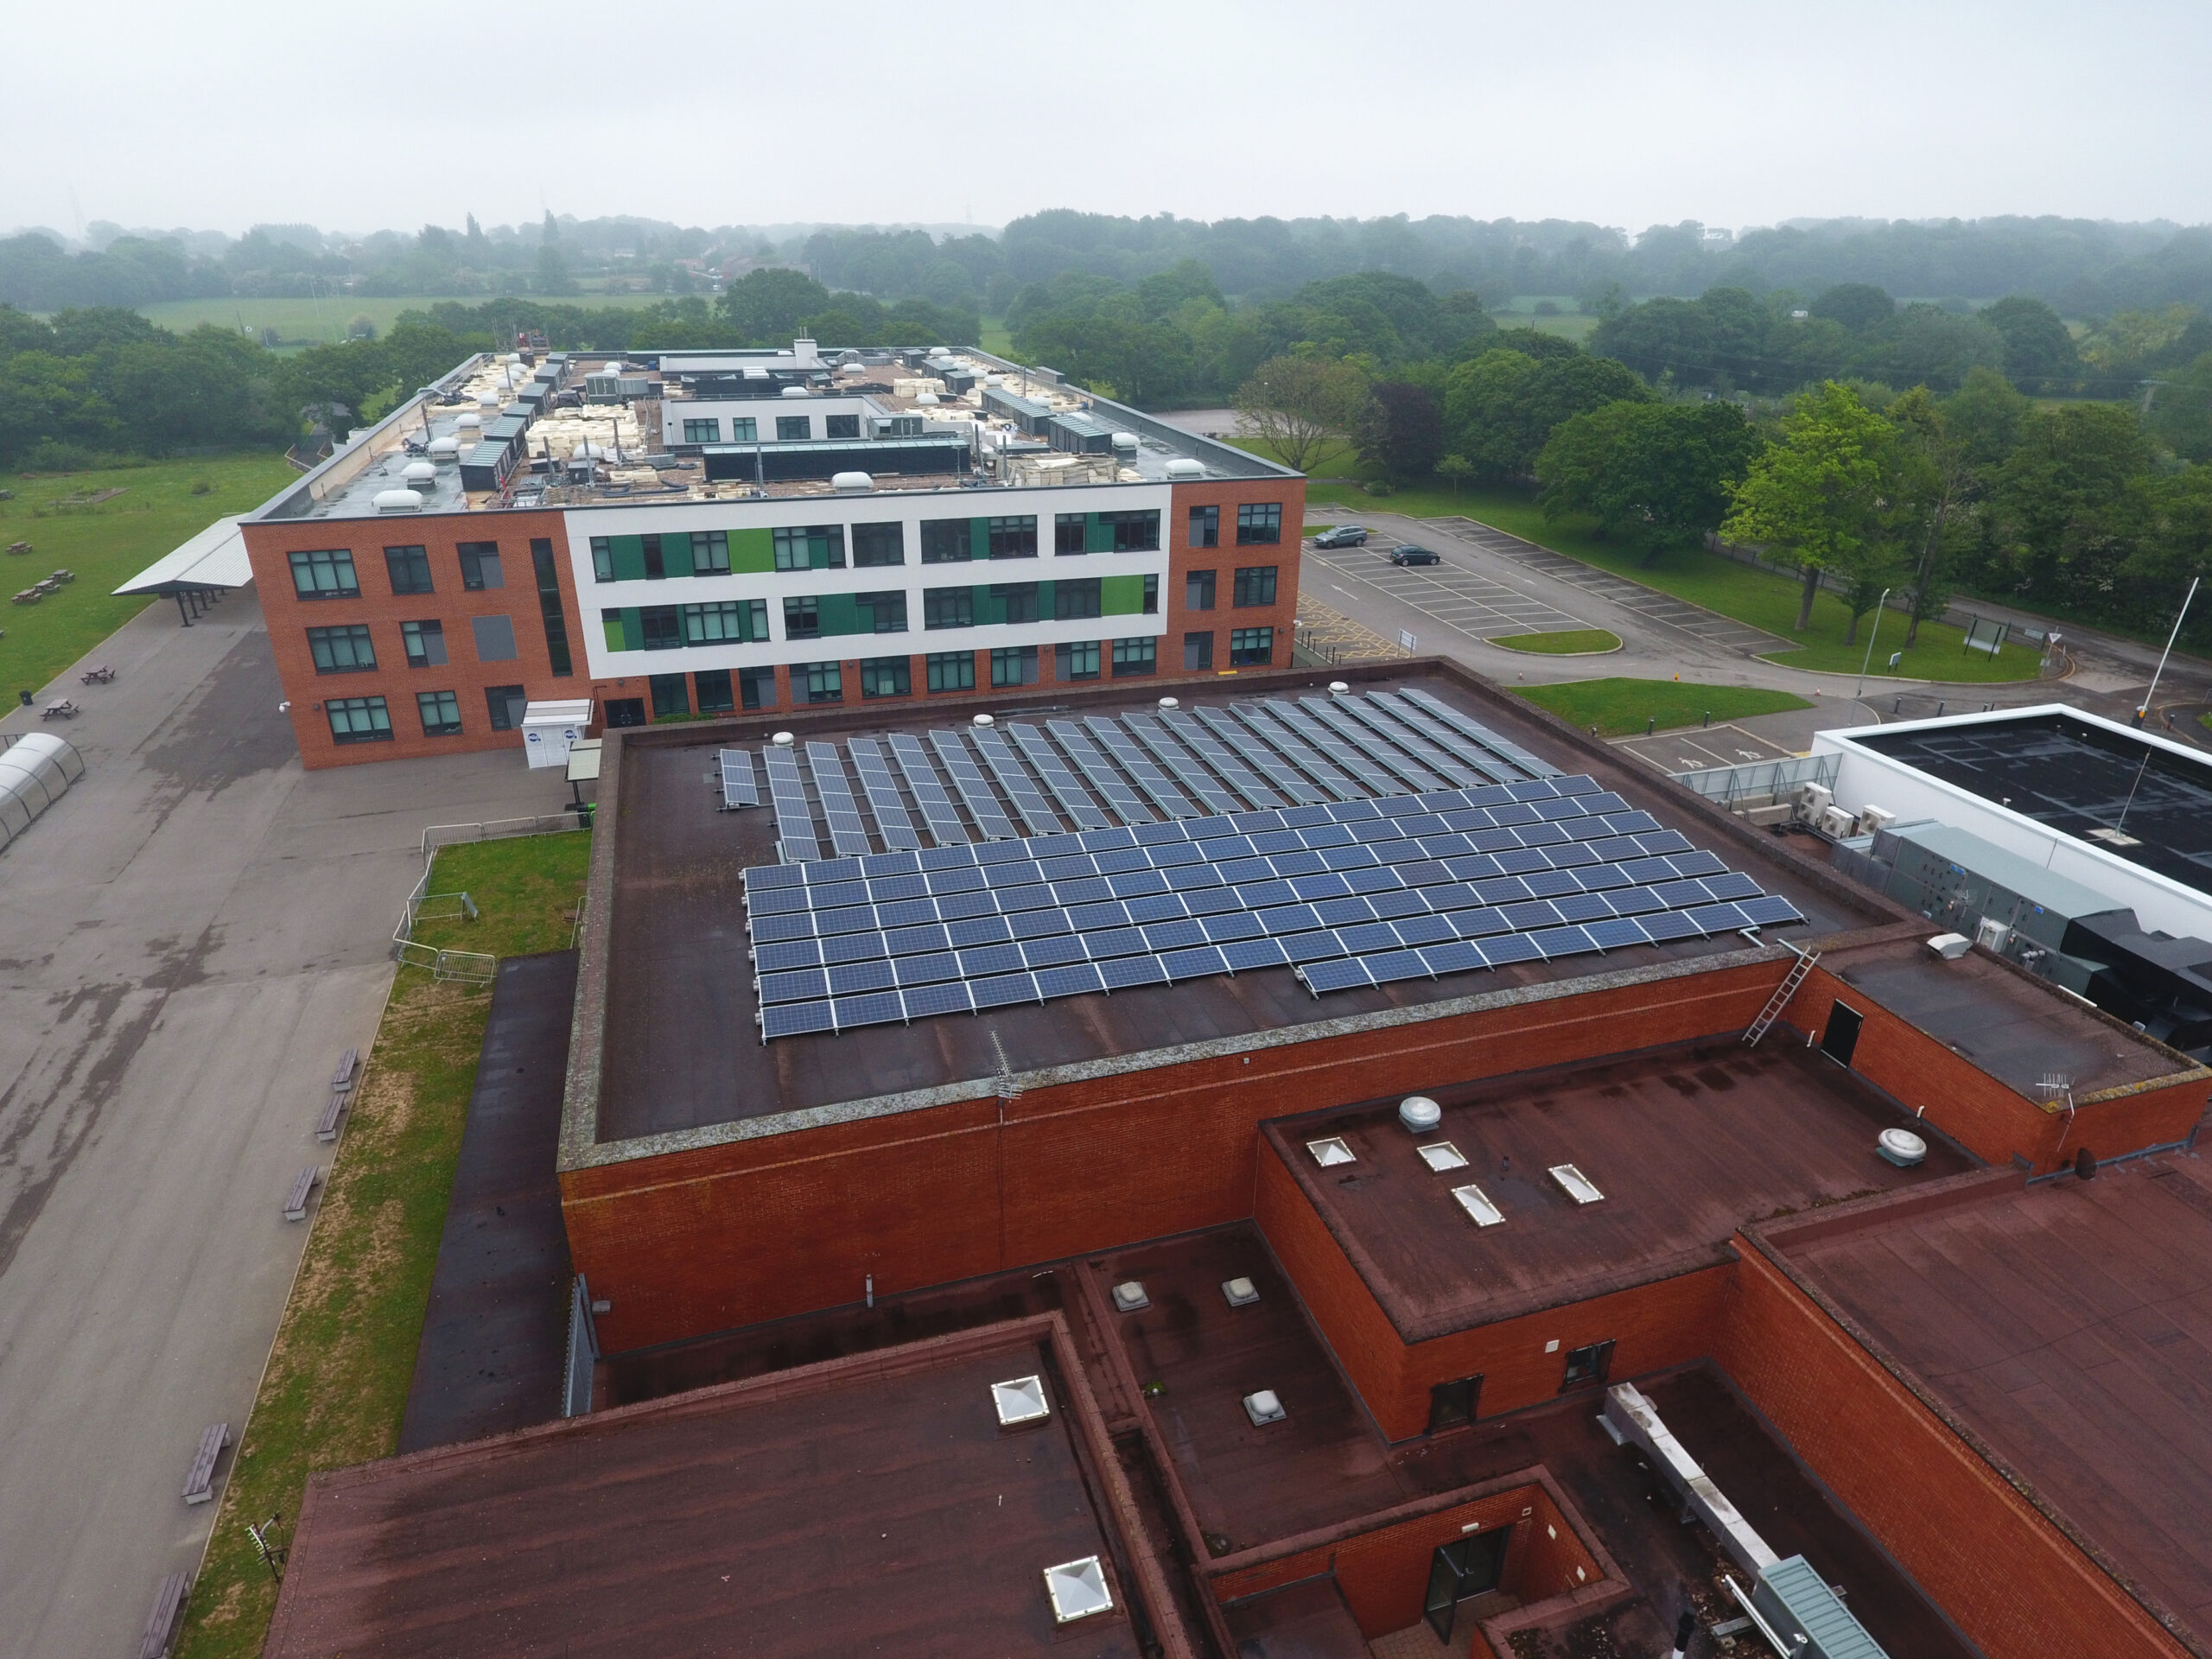 Neston Sports Centre Solar Panels